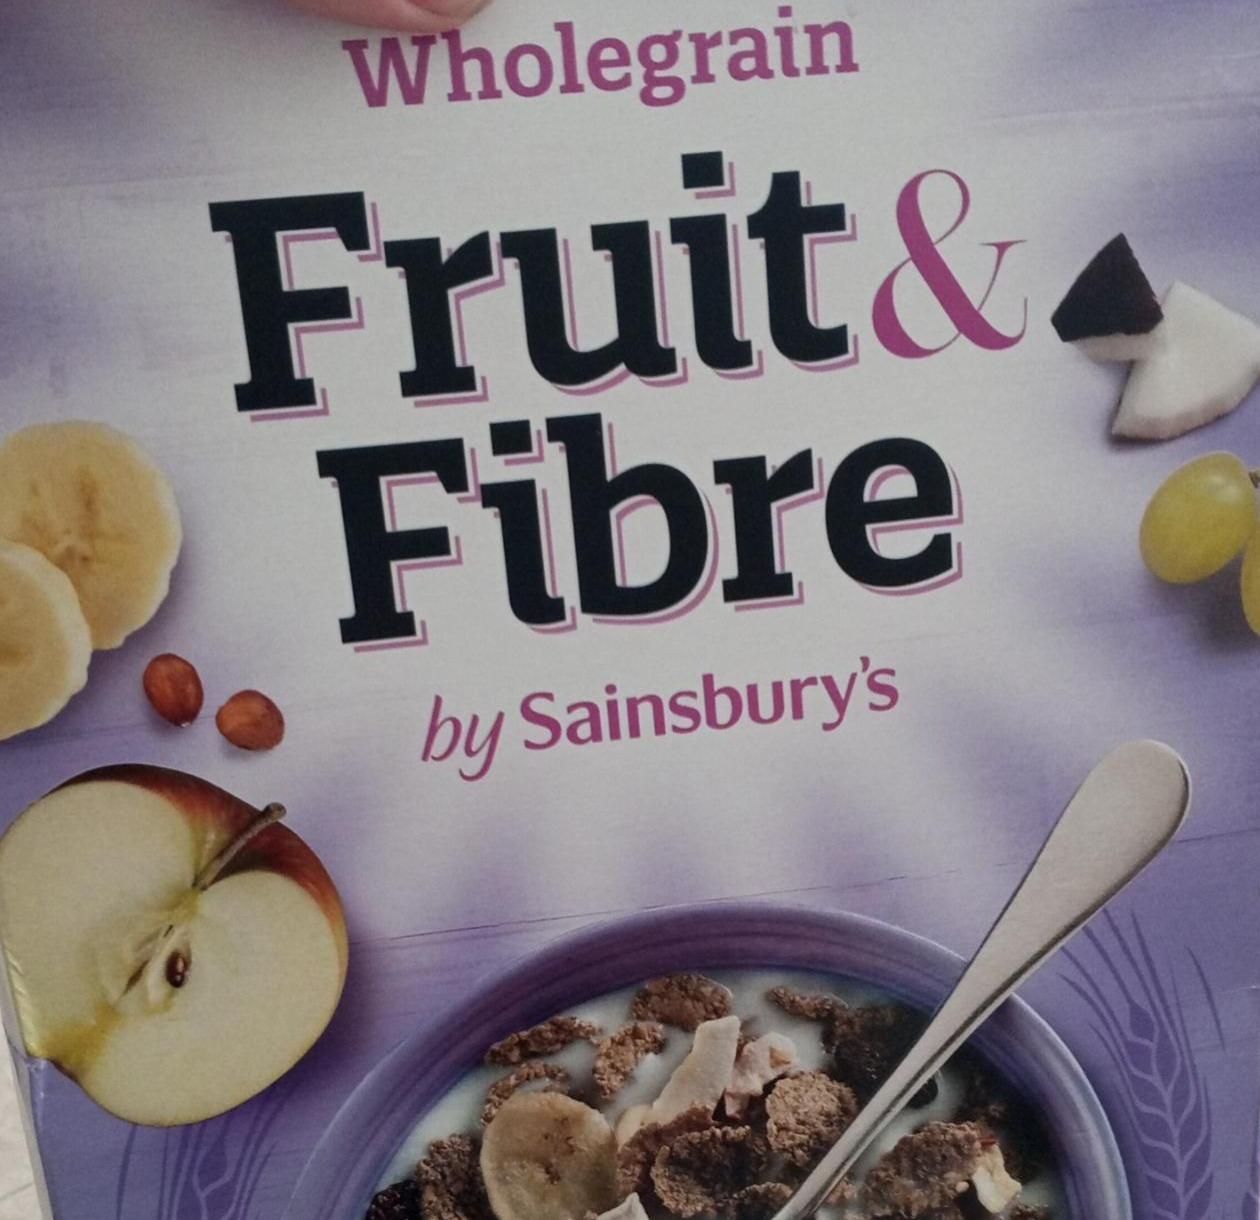 Фото - Fruit & fibre by Sainsbury's